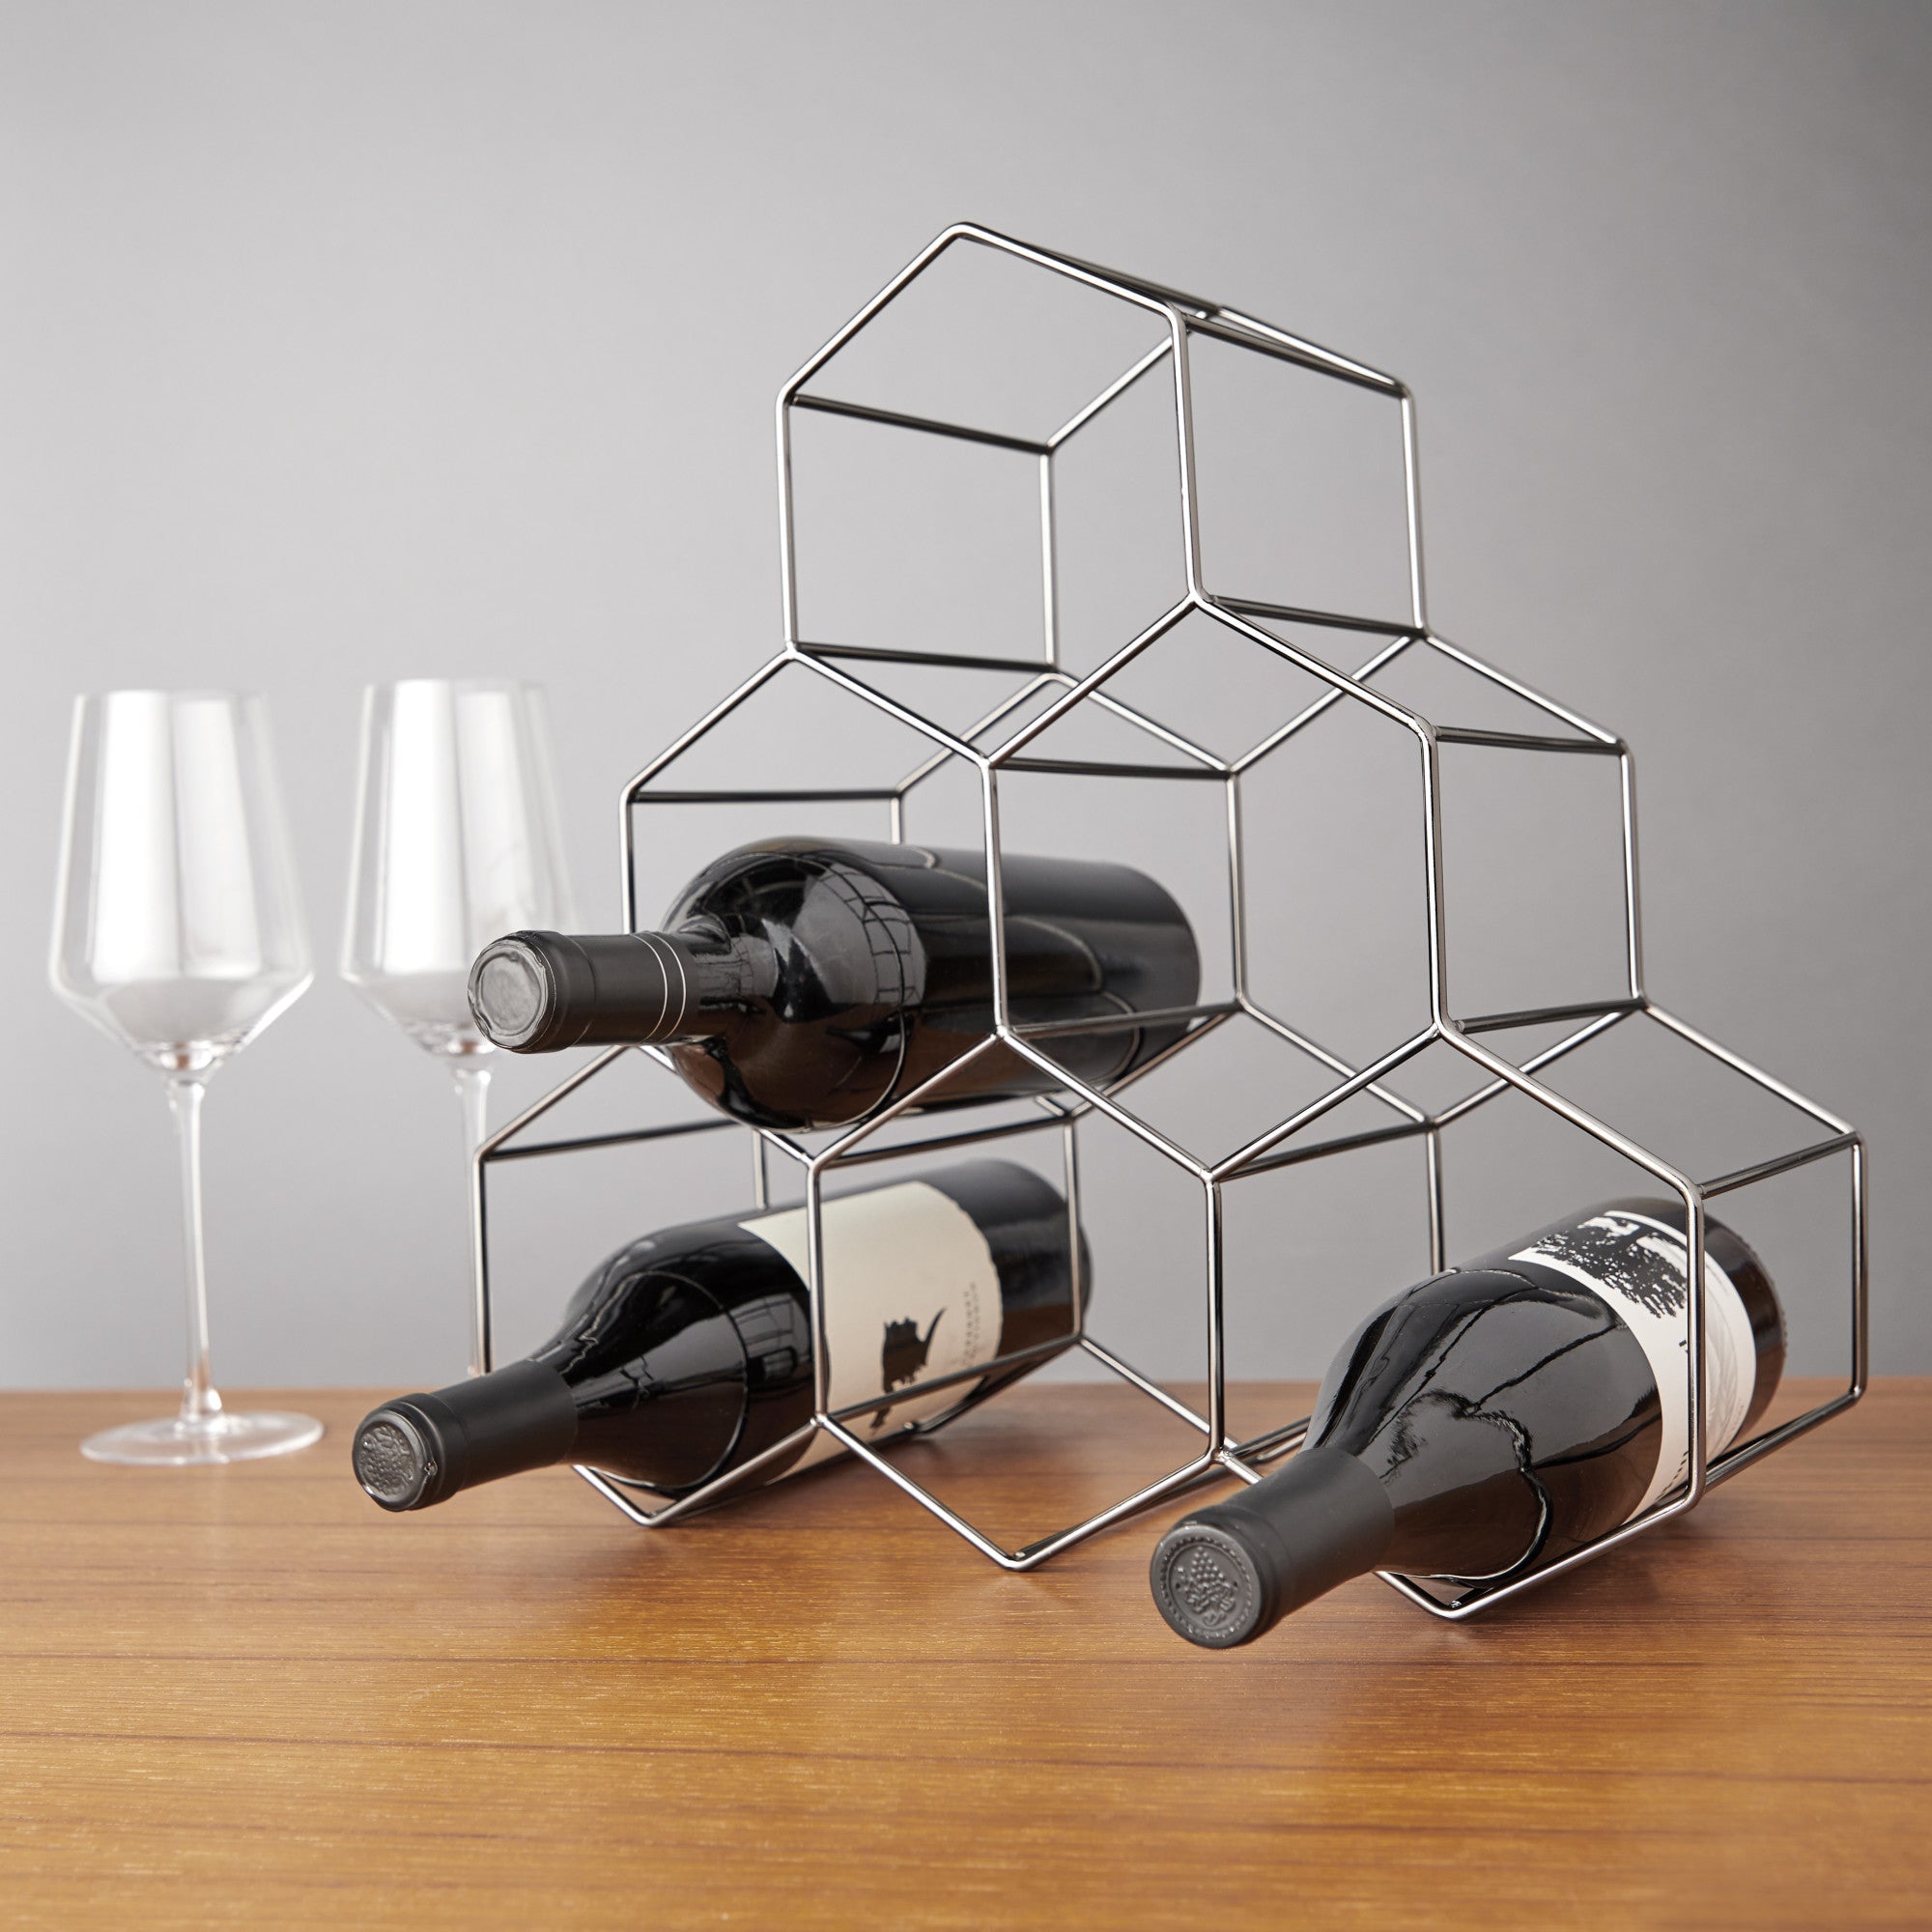 Gunmetal Geo Counter Top Wine Rack by Viski® (10166) Wine Accessories Viski